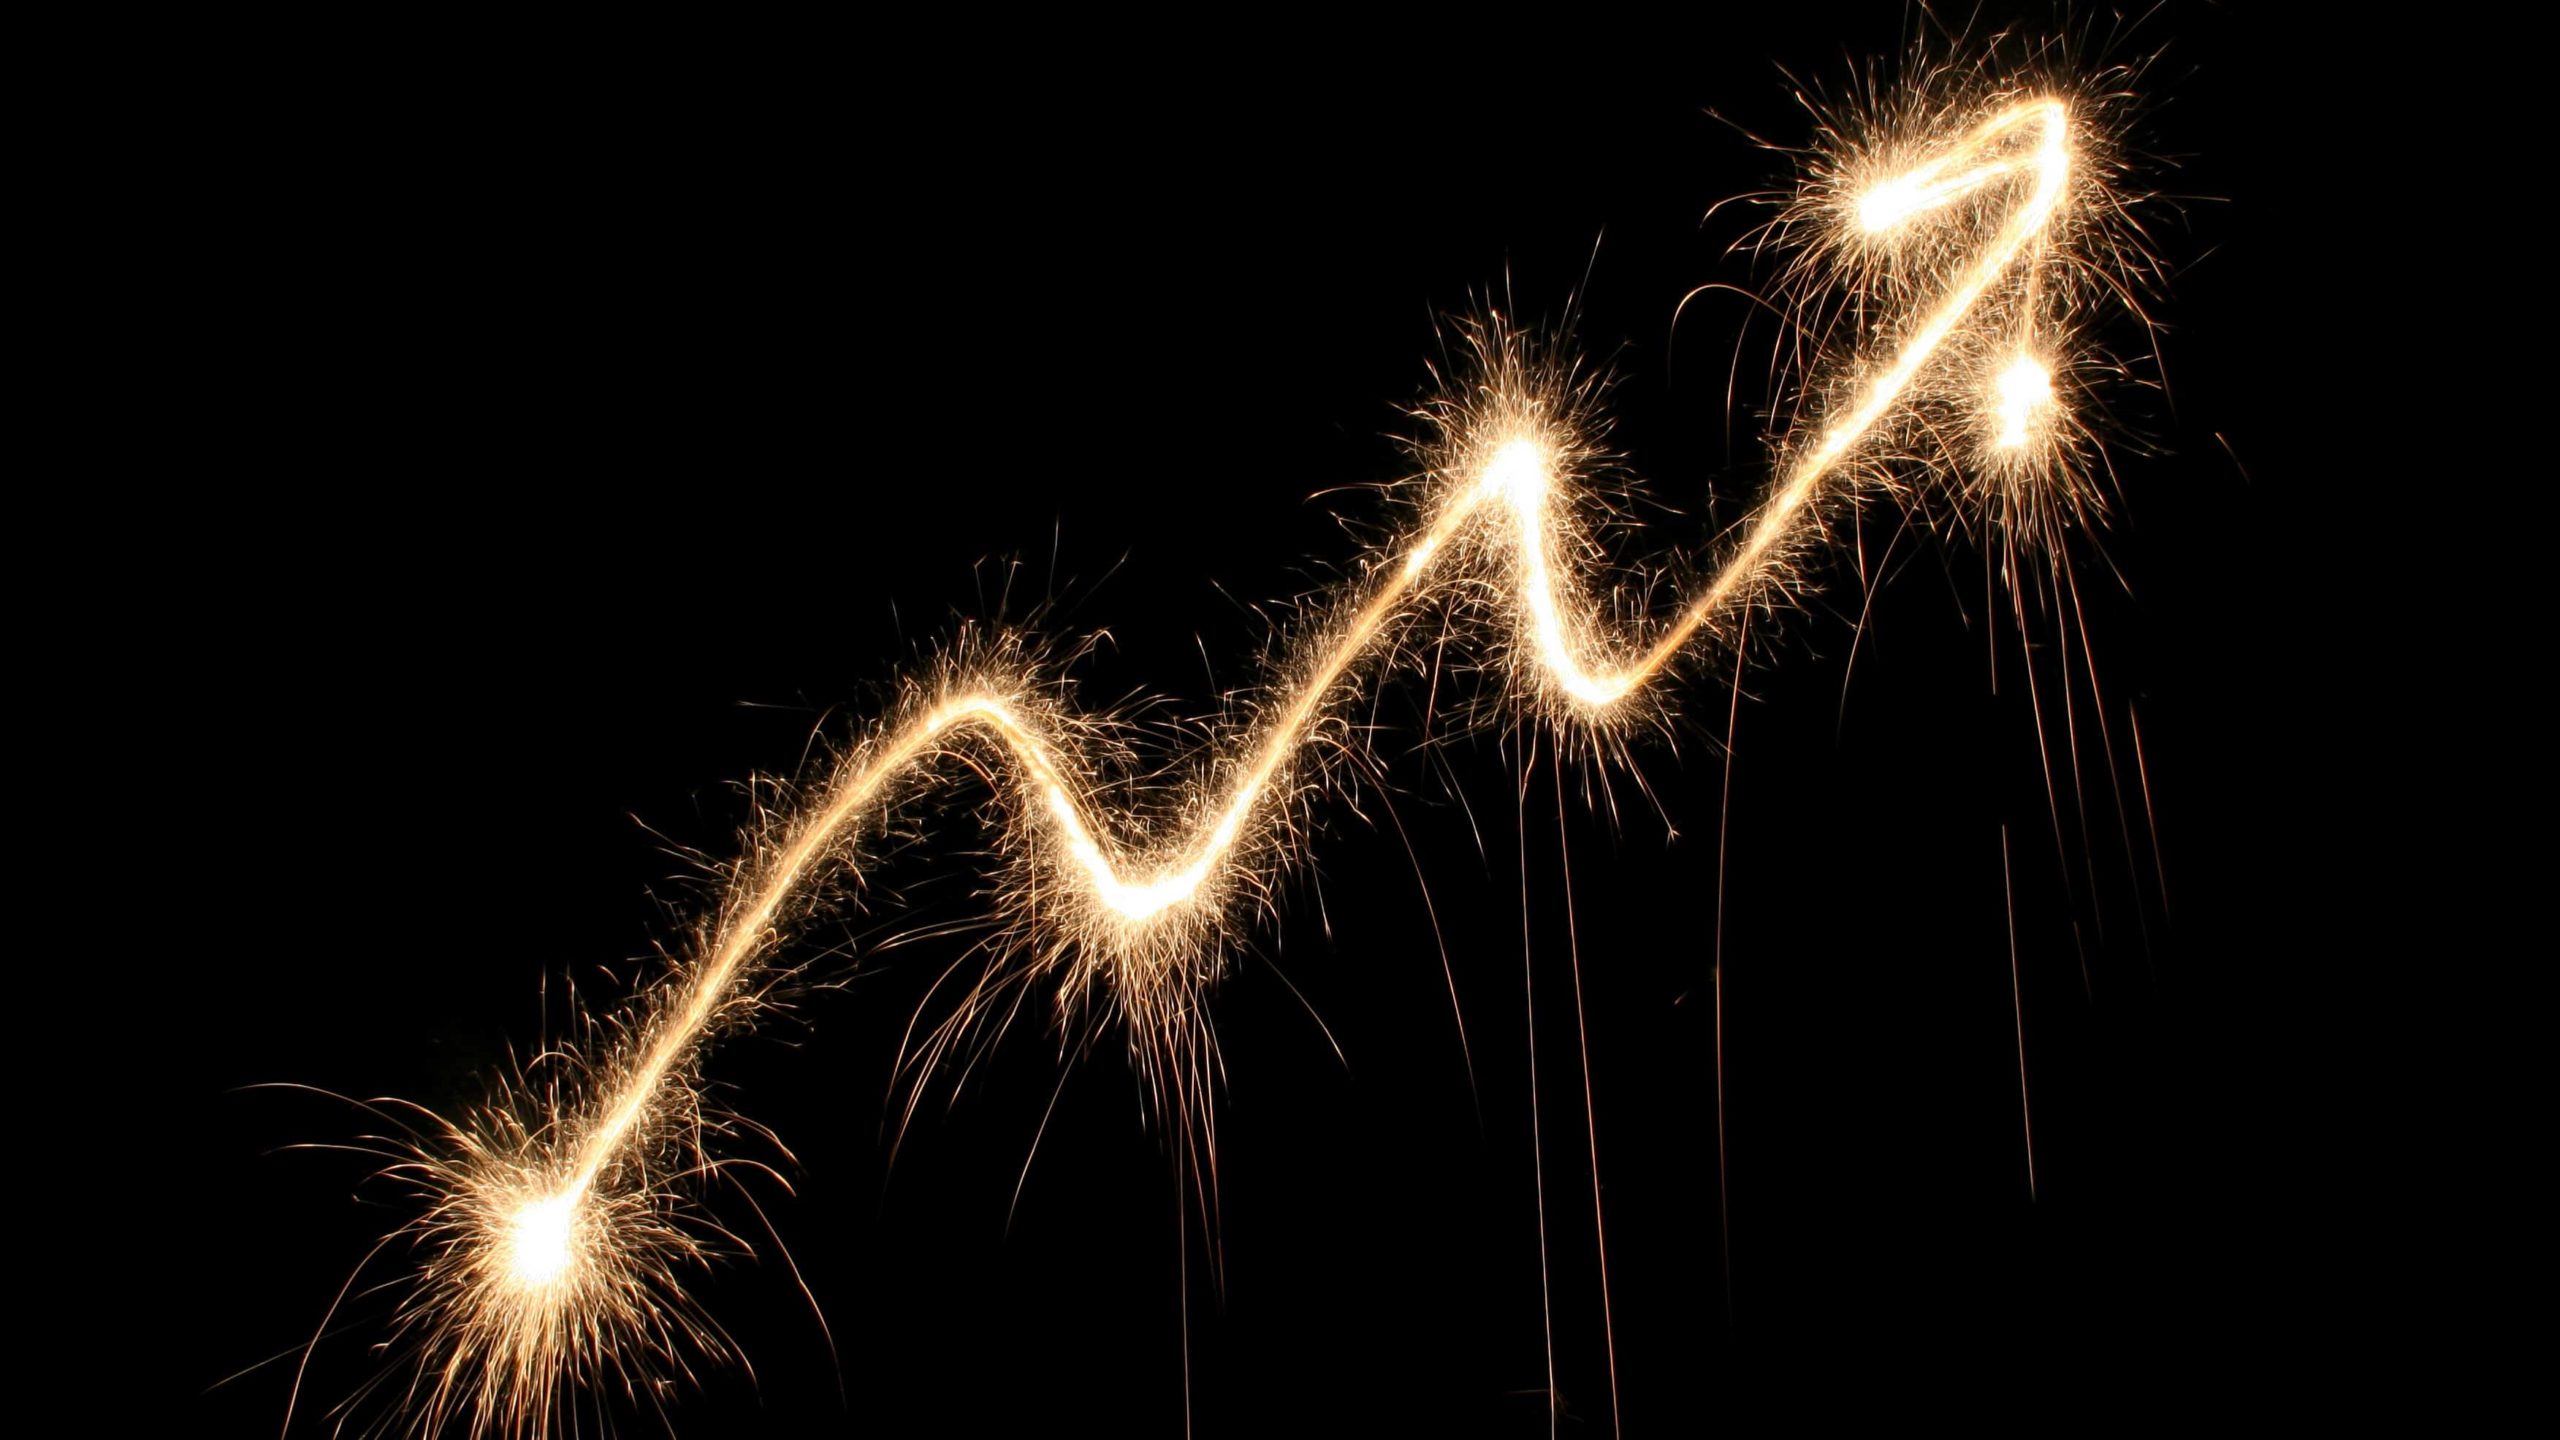 upward trending arrow made from fireworks display